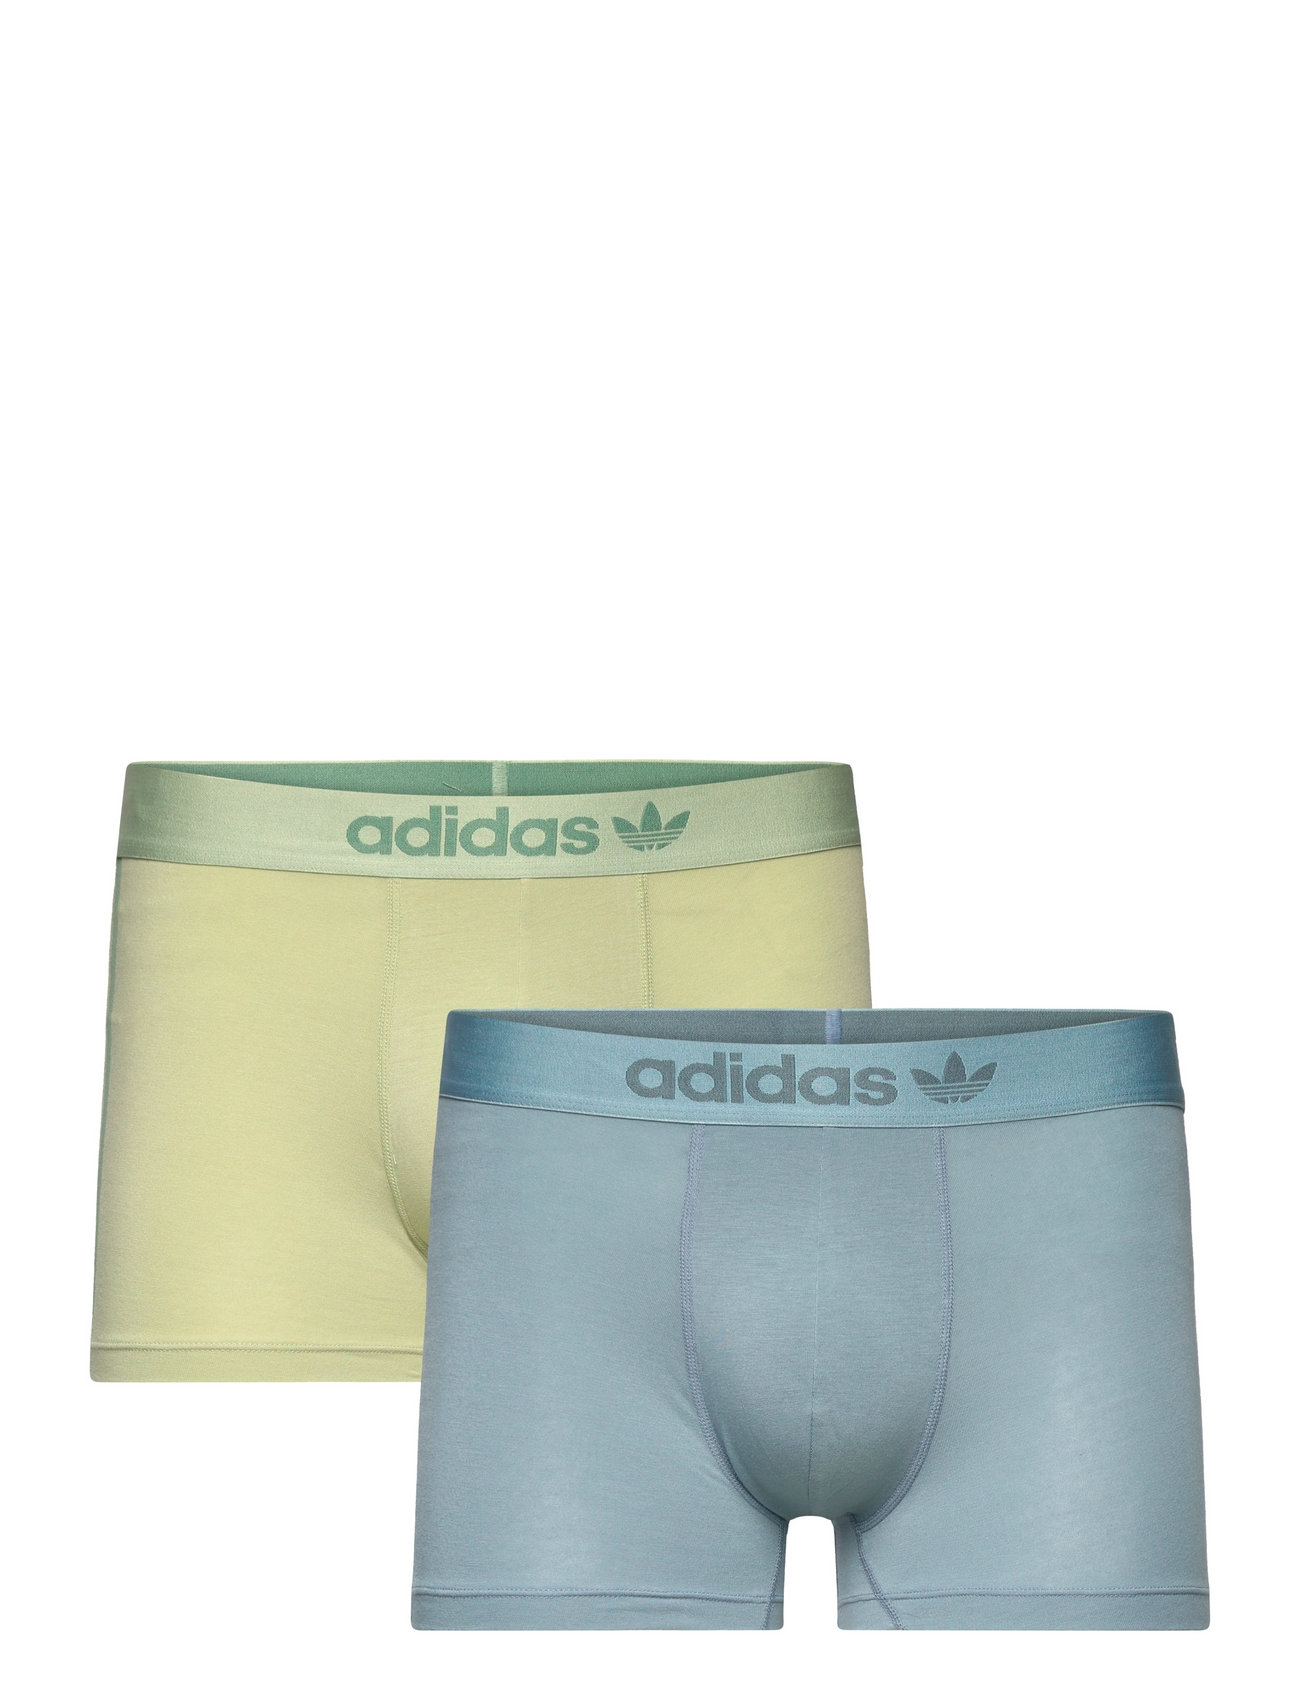 Trunks Originals adidas Underwear Boxers -